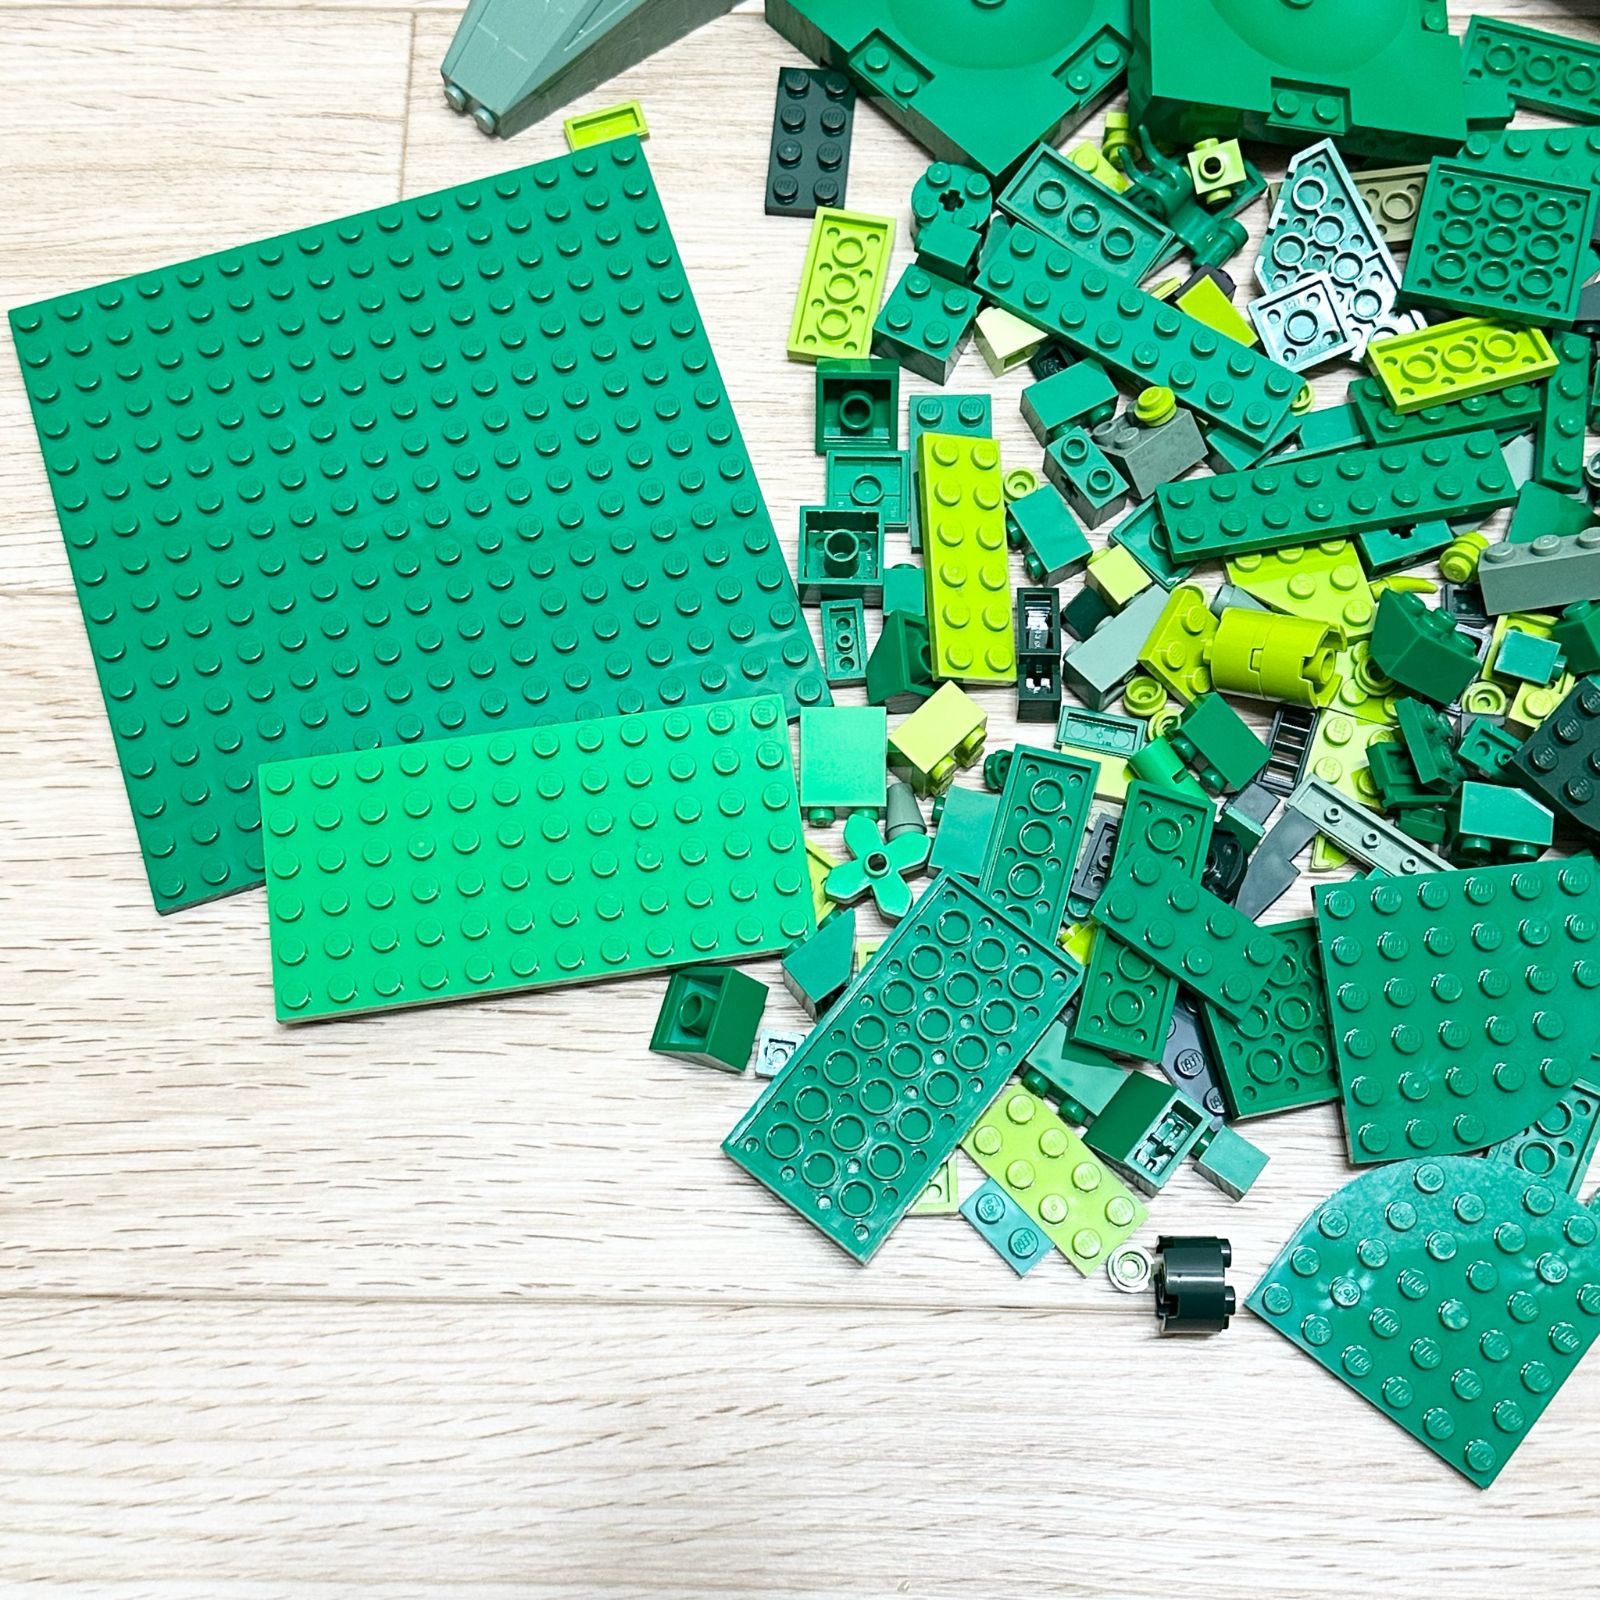 LEGO レゴ グリーン系 中古 パーツ 16x16プレート ラウンド 特殊パーツ